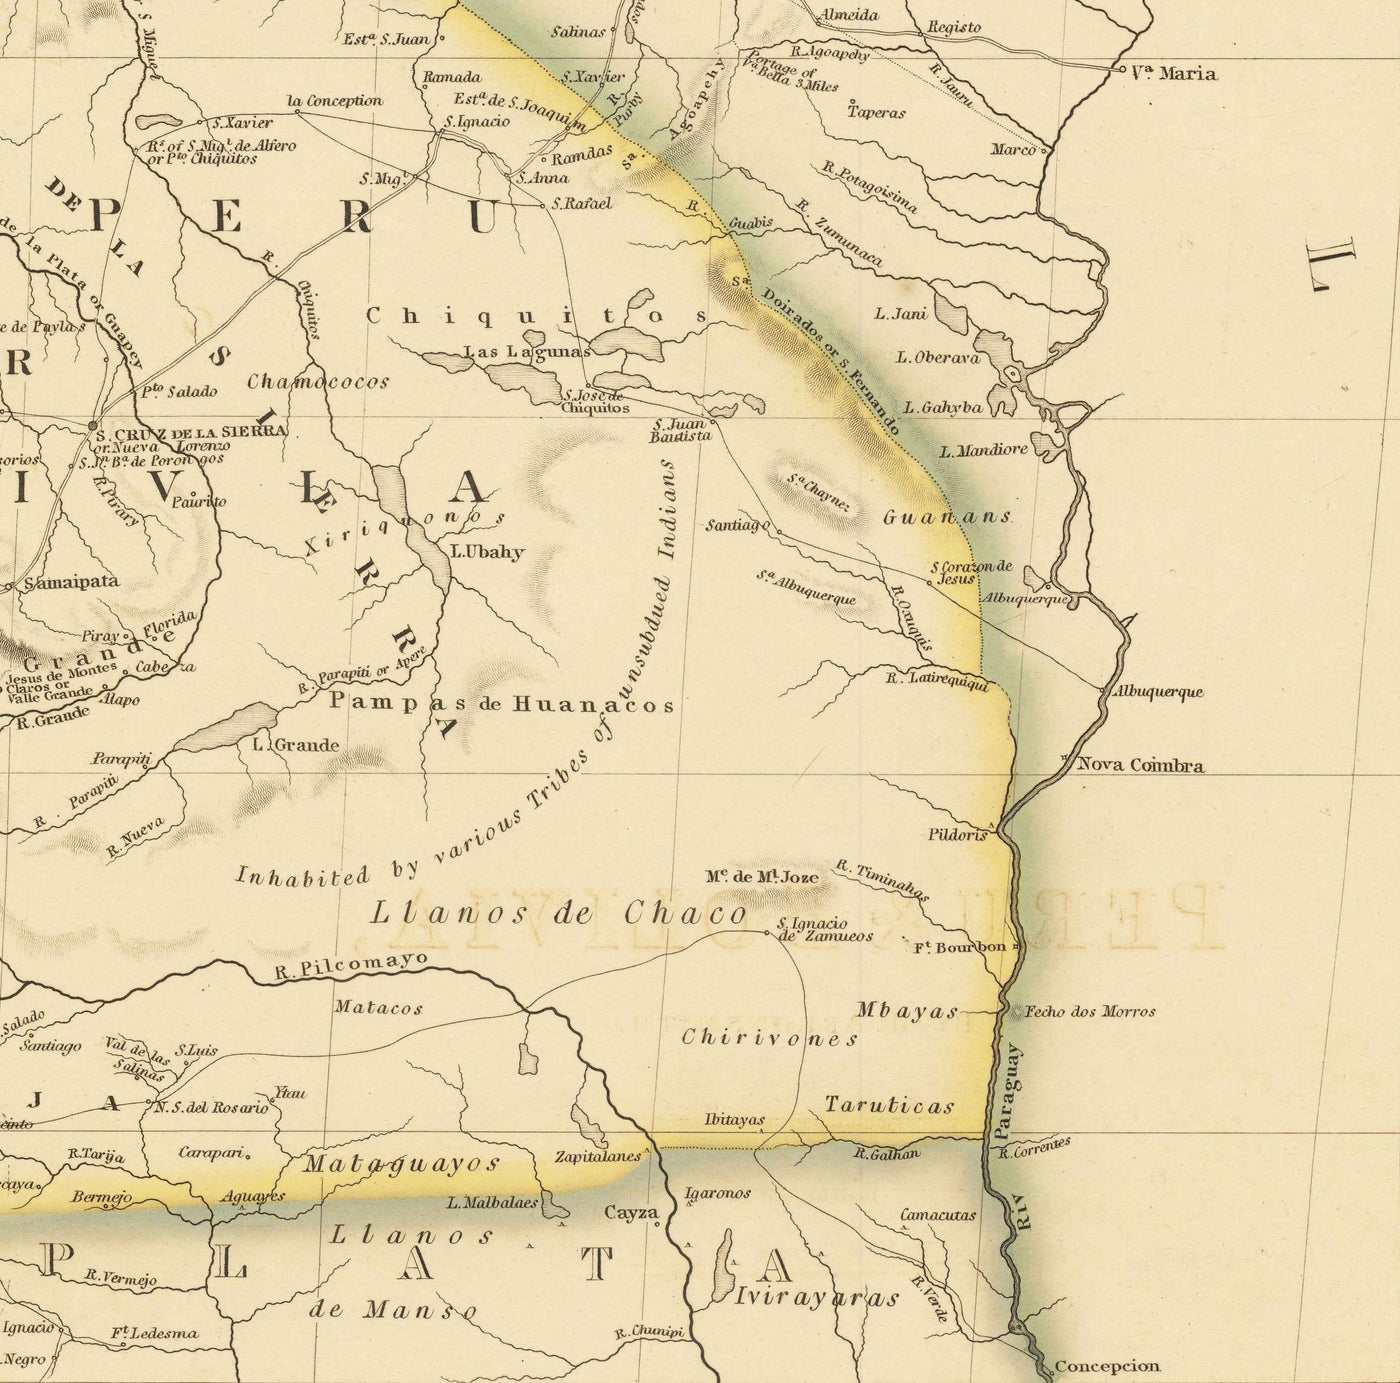 Old Map of Peru & Bolivia, 1842 by Arrowsmith - Upper Peru, Chile, South America, Andes, La Paz, Lima, Atacama